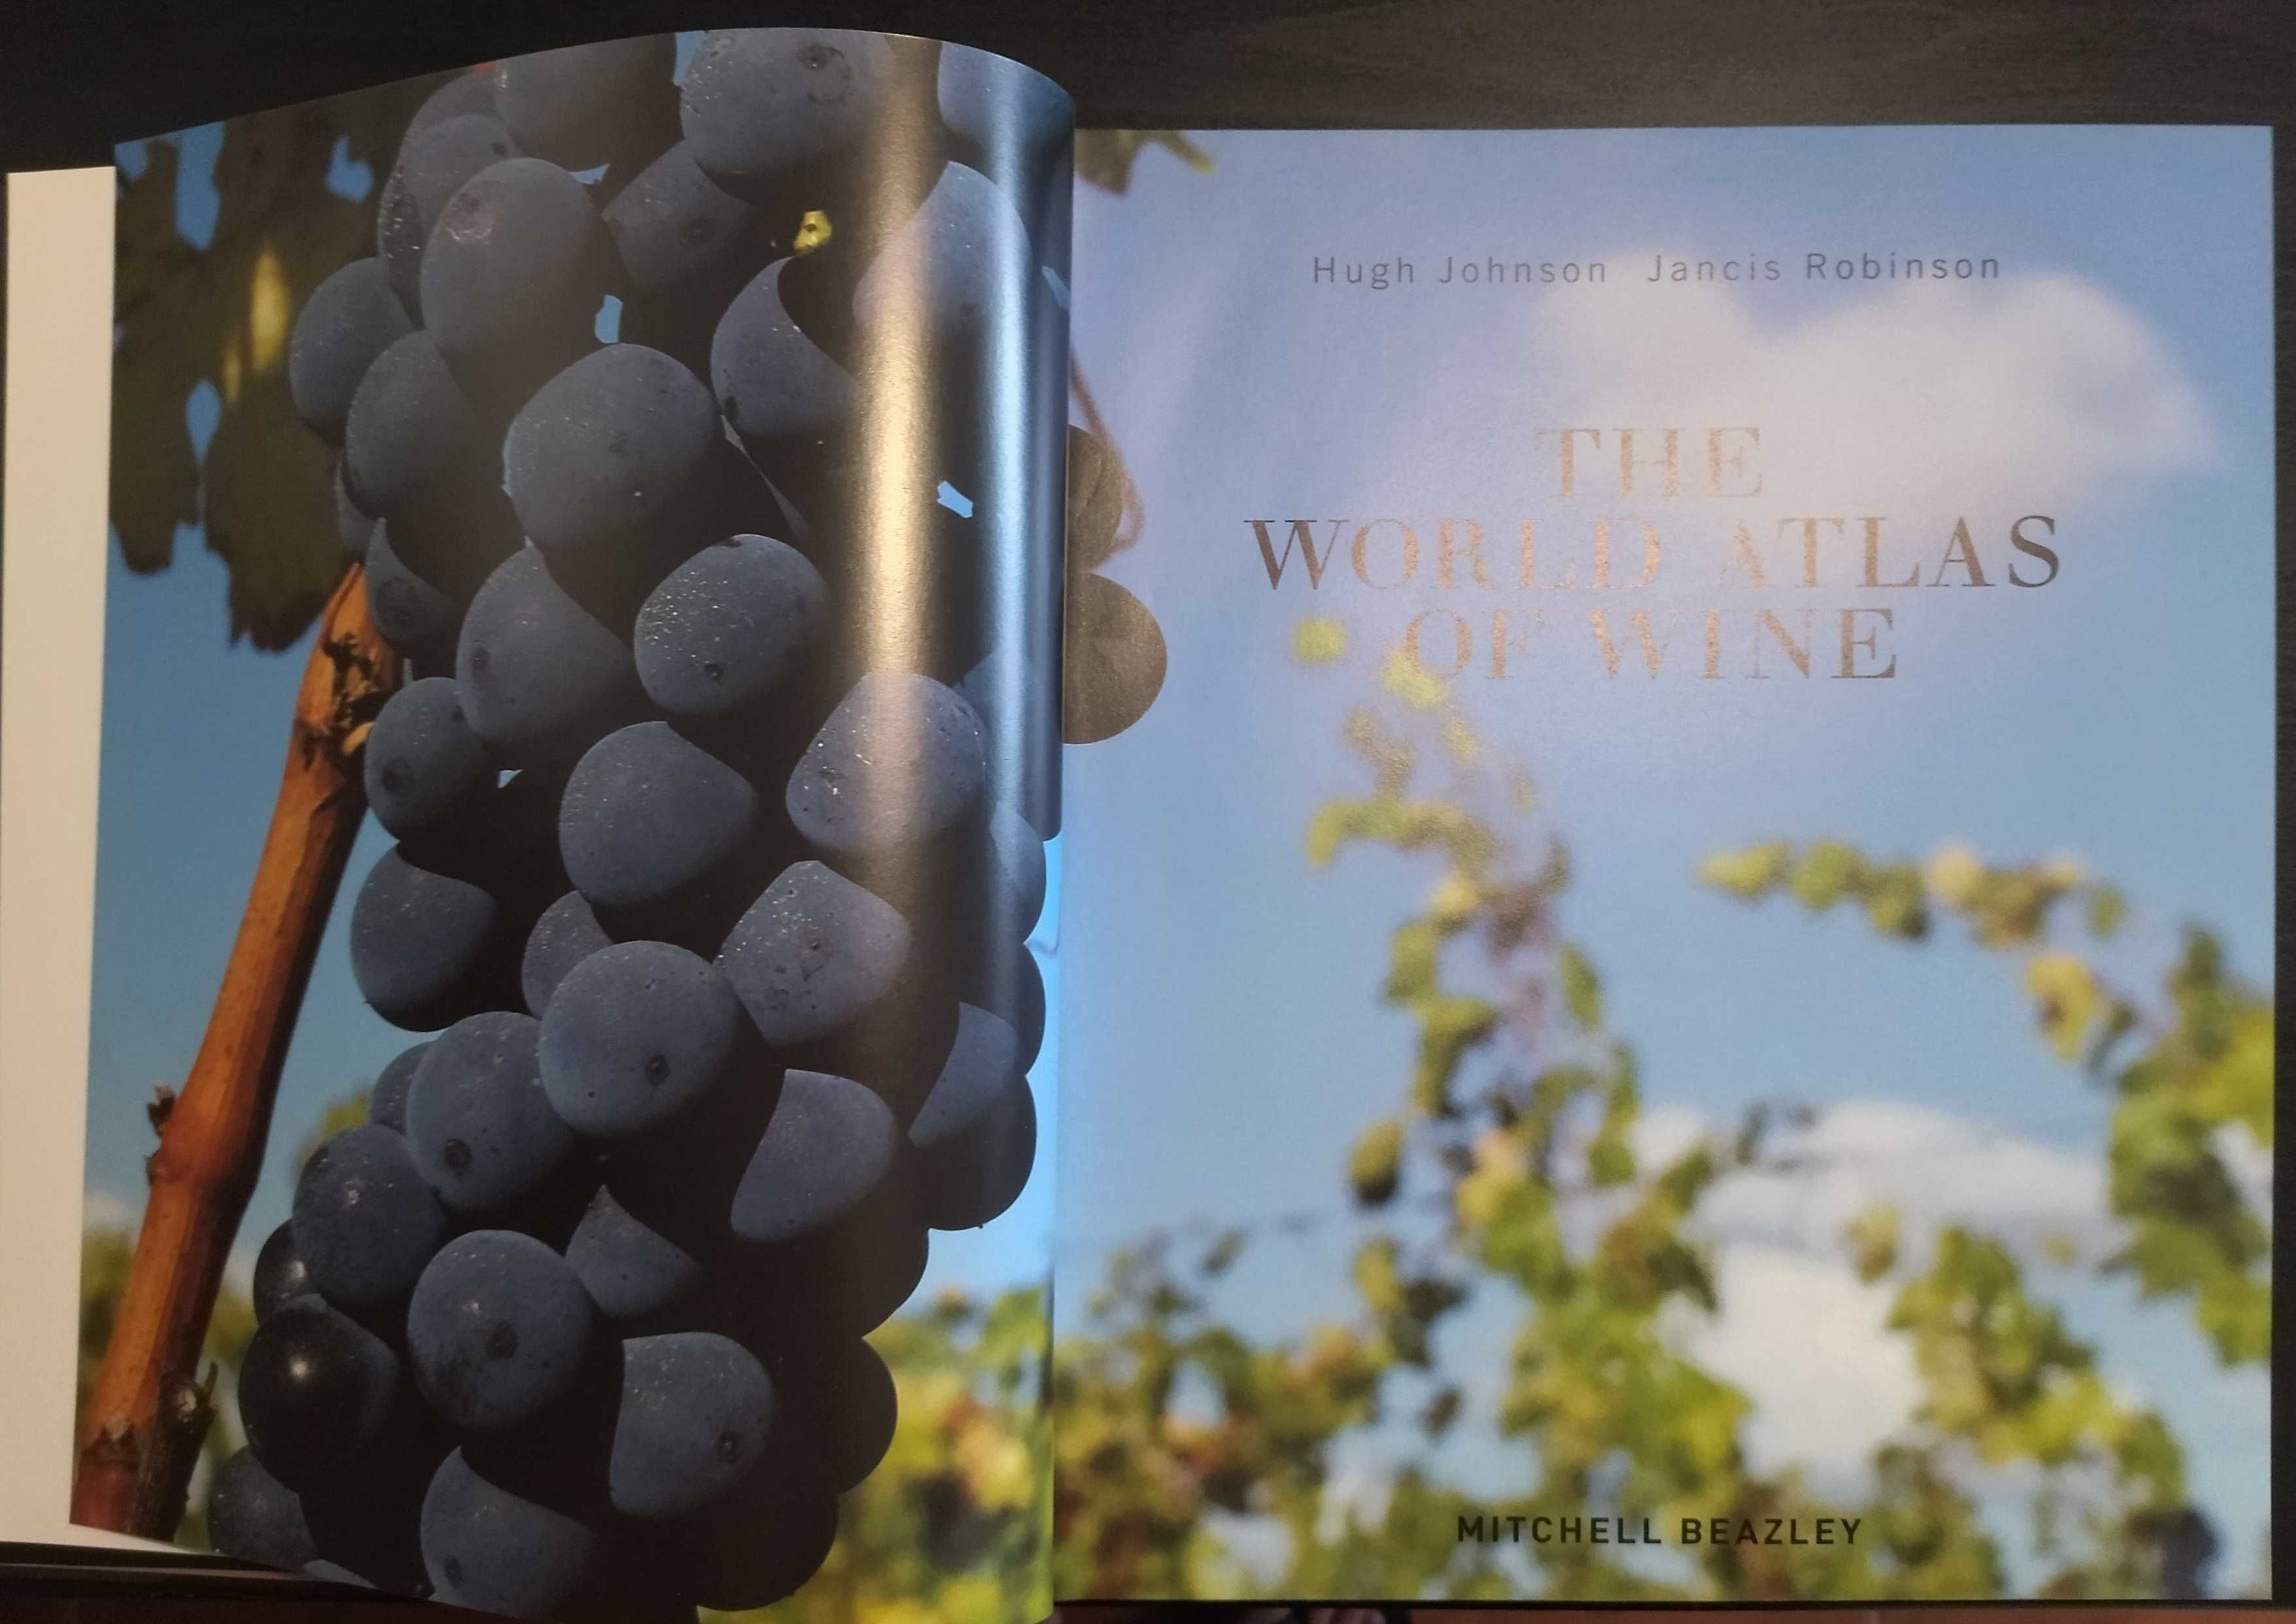 " The World Atlas of Wine"